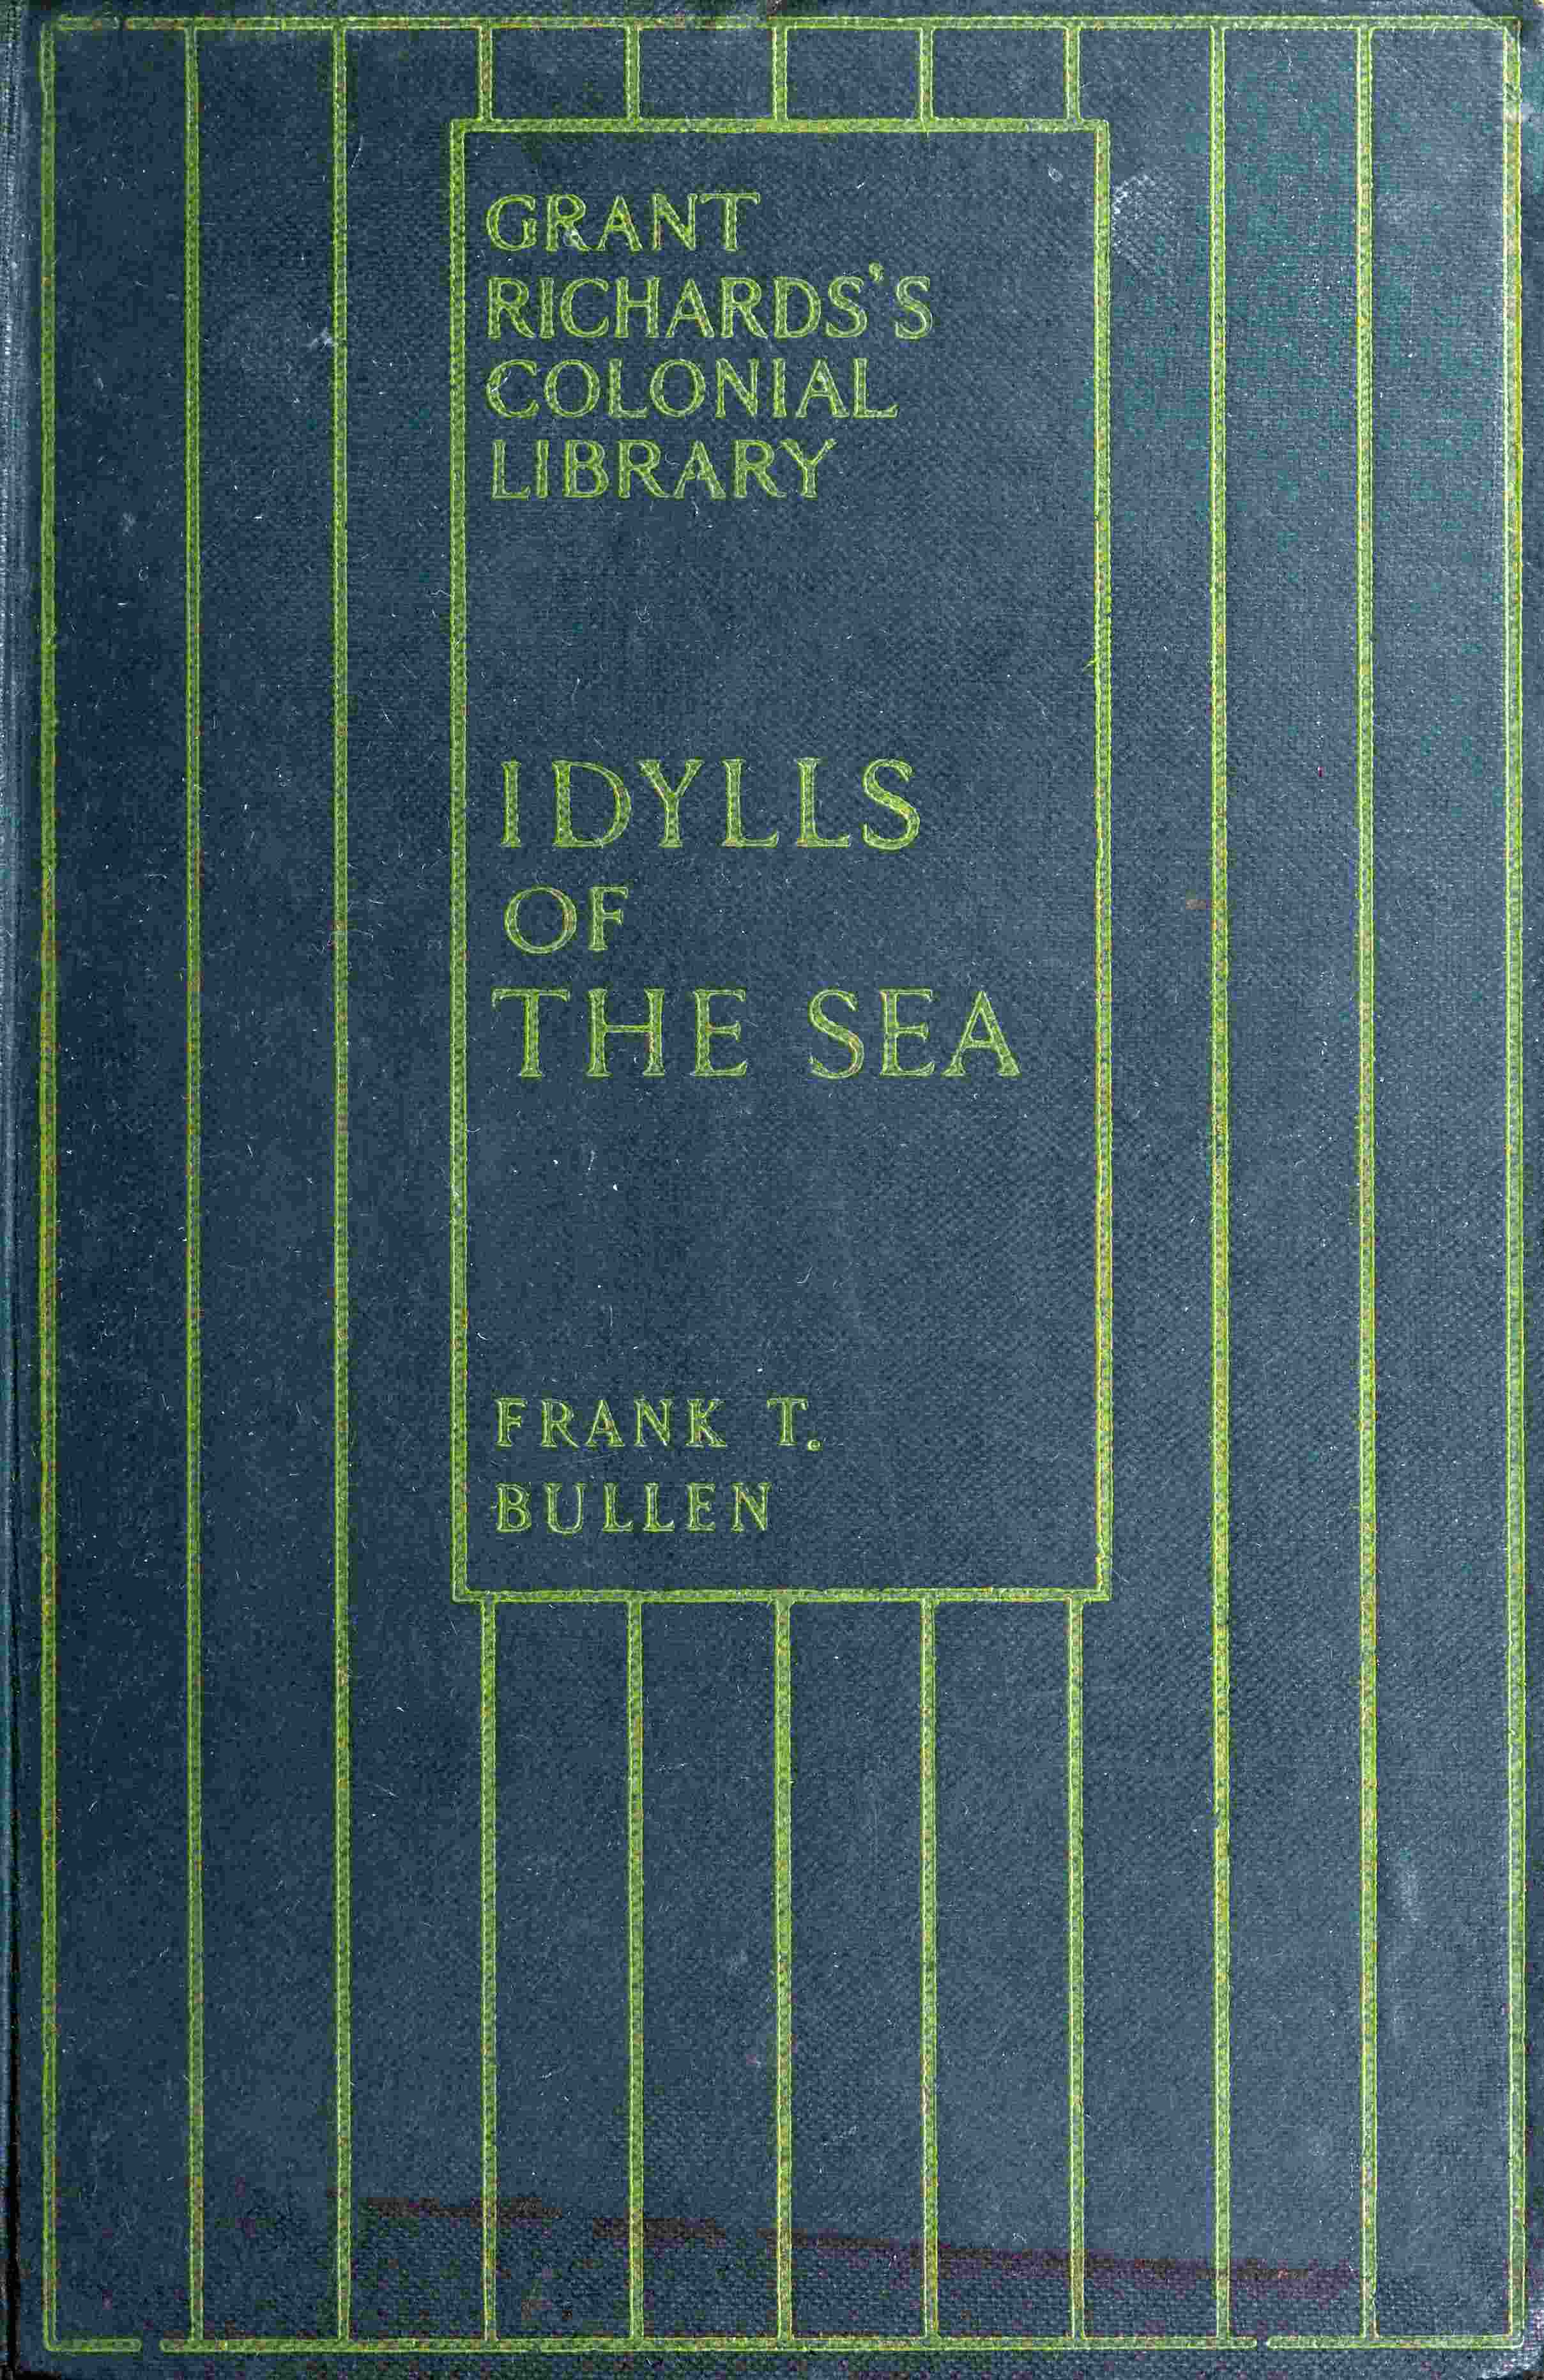 Idylls of the Sea, by Frank T. Bullen—A Project Gutenberg eBook